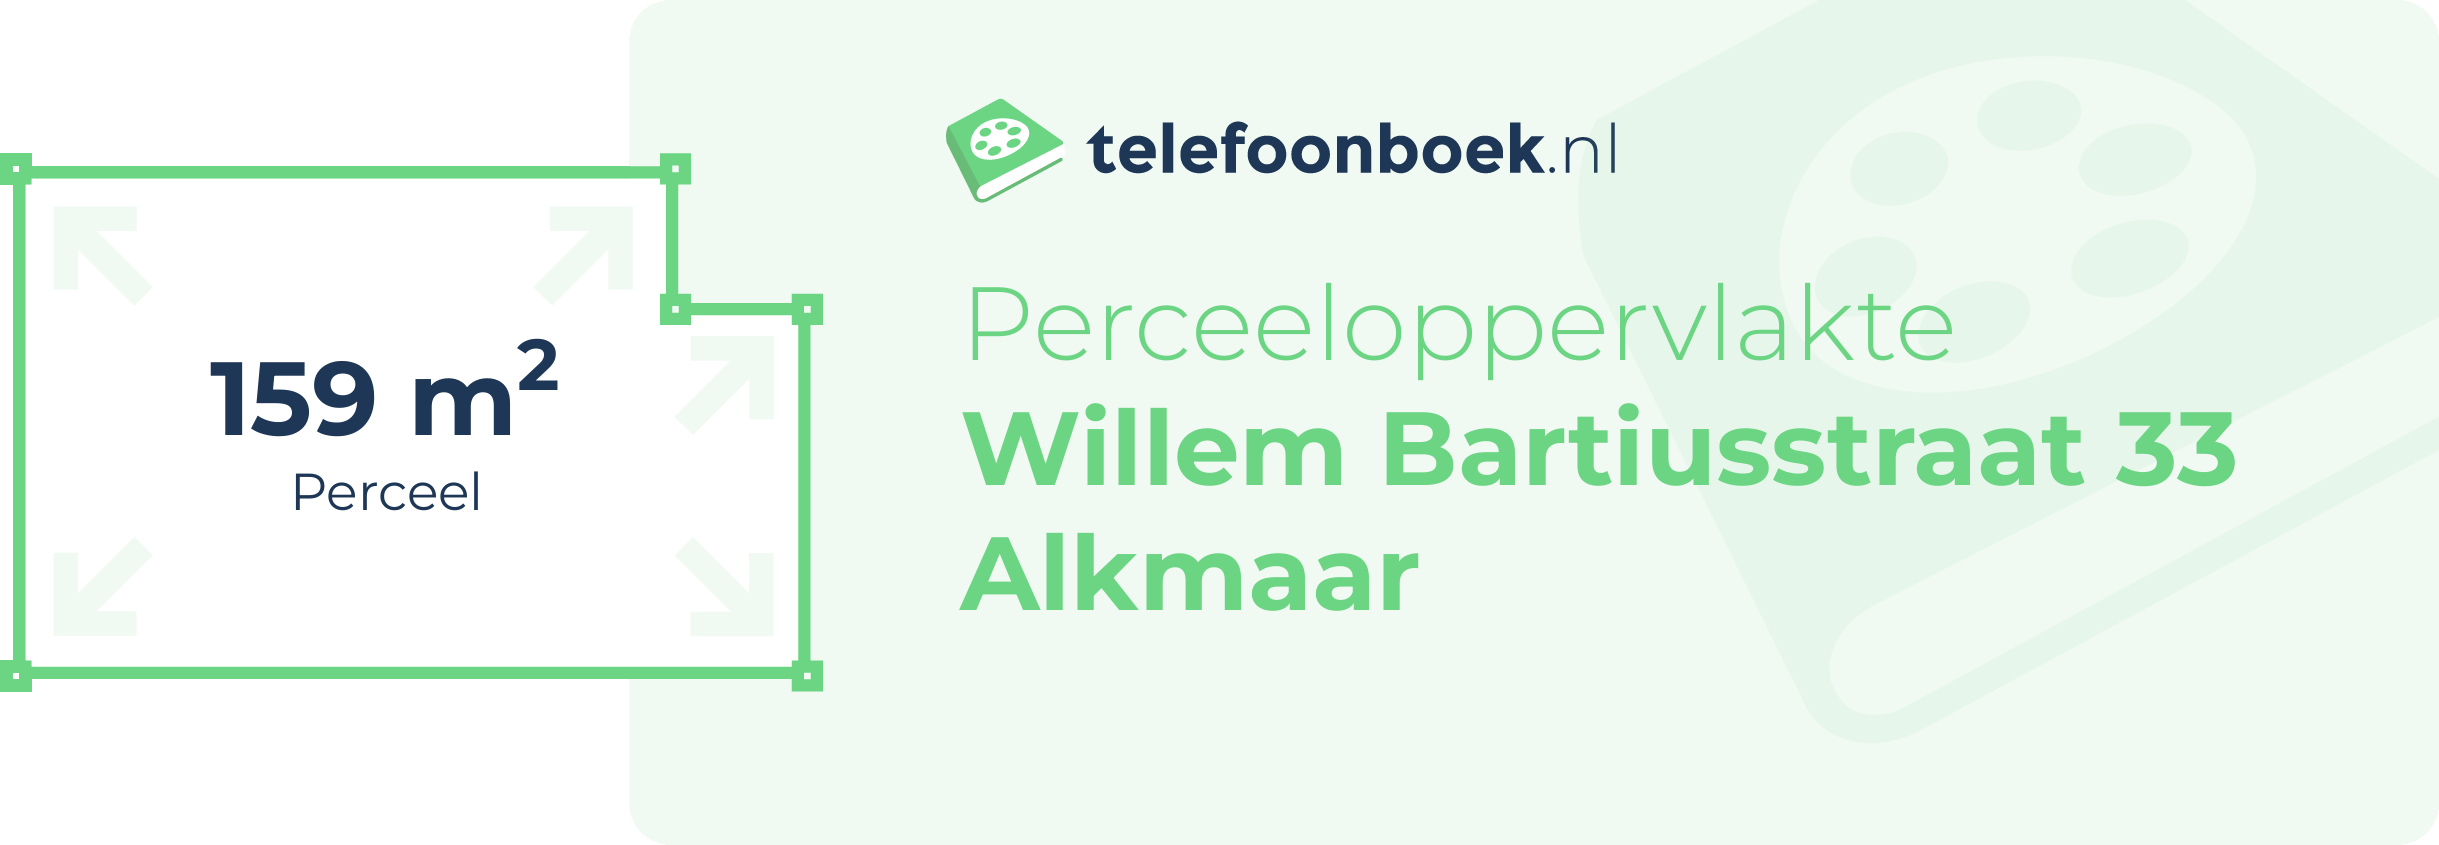 Perceeloppervlakte Willem Bartiusstraat 33 Alkmaar